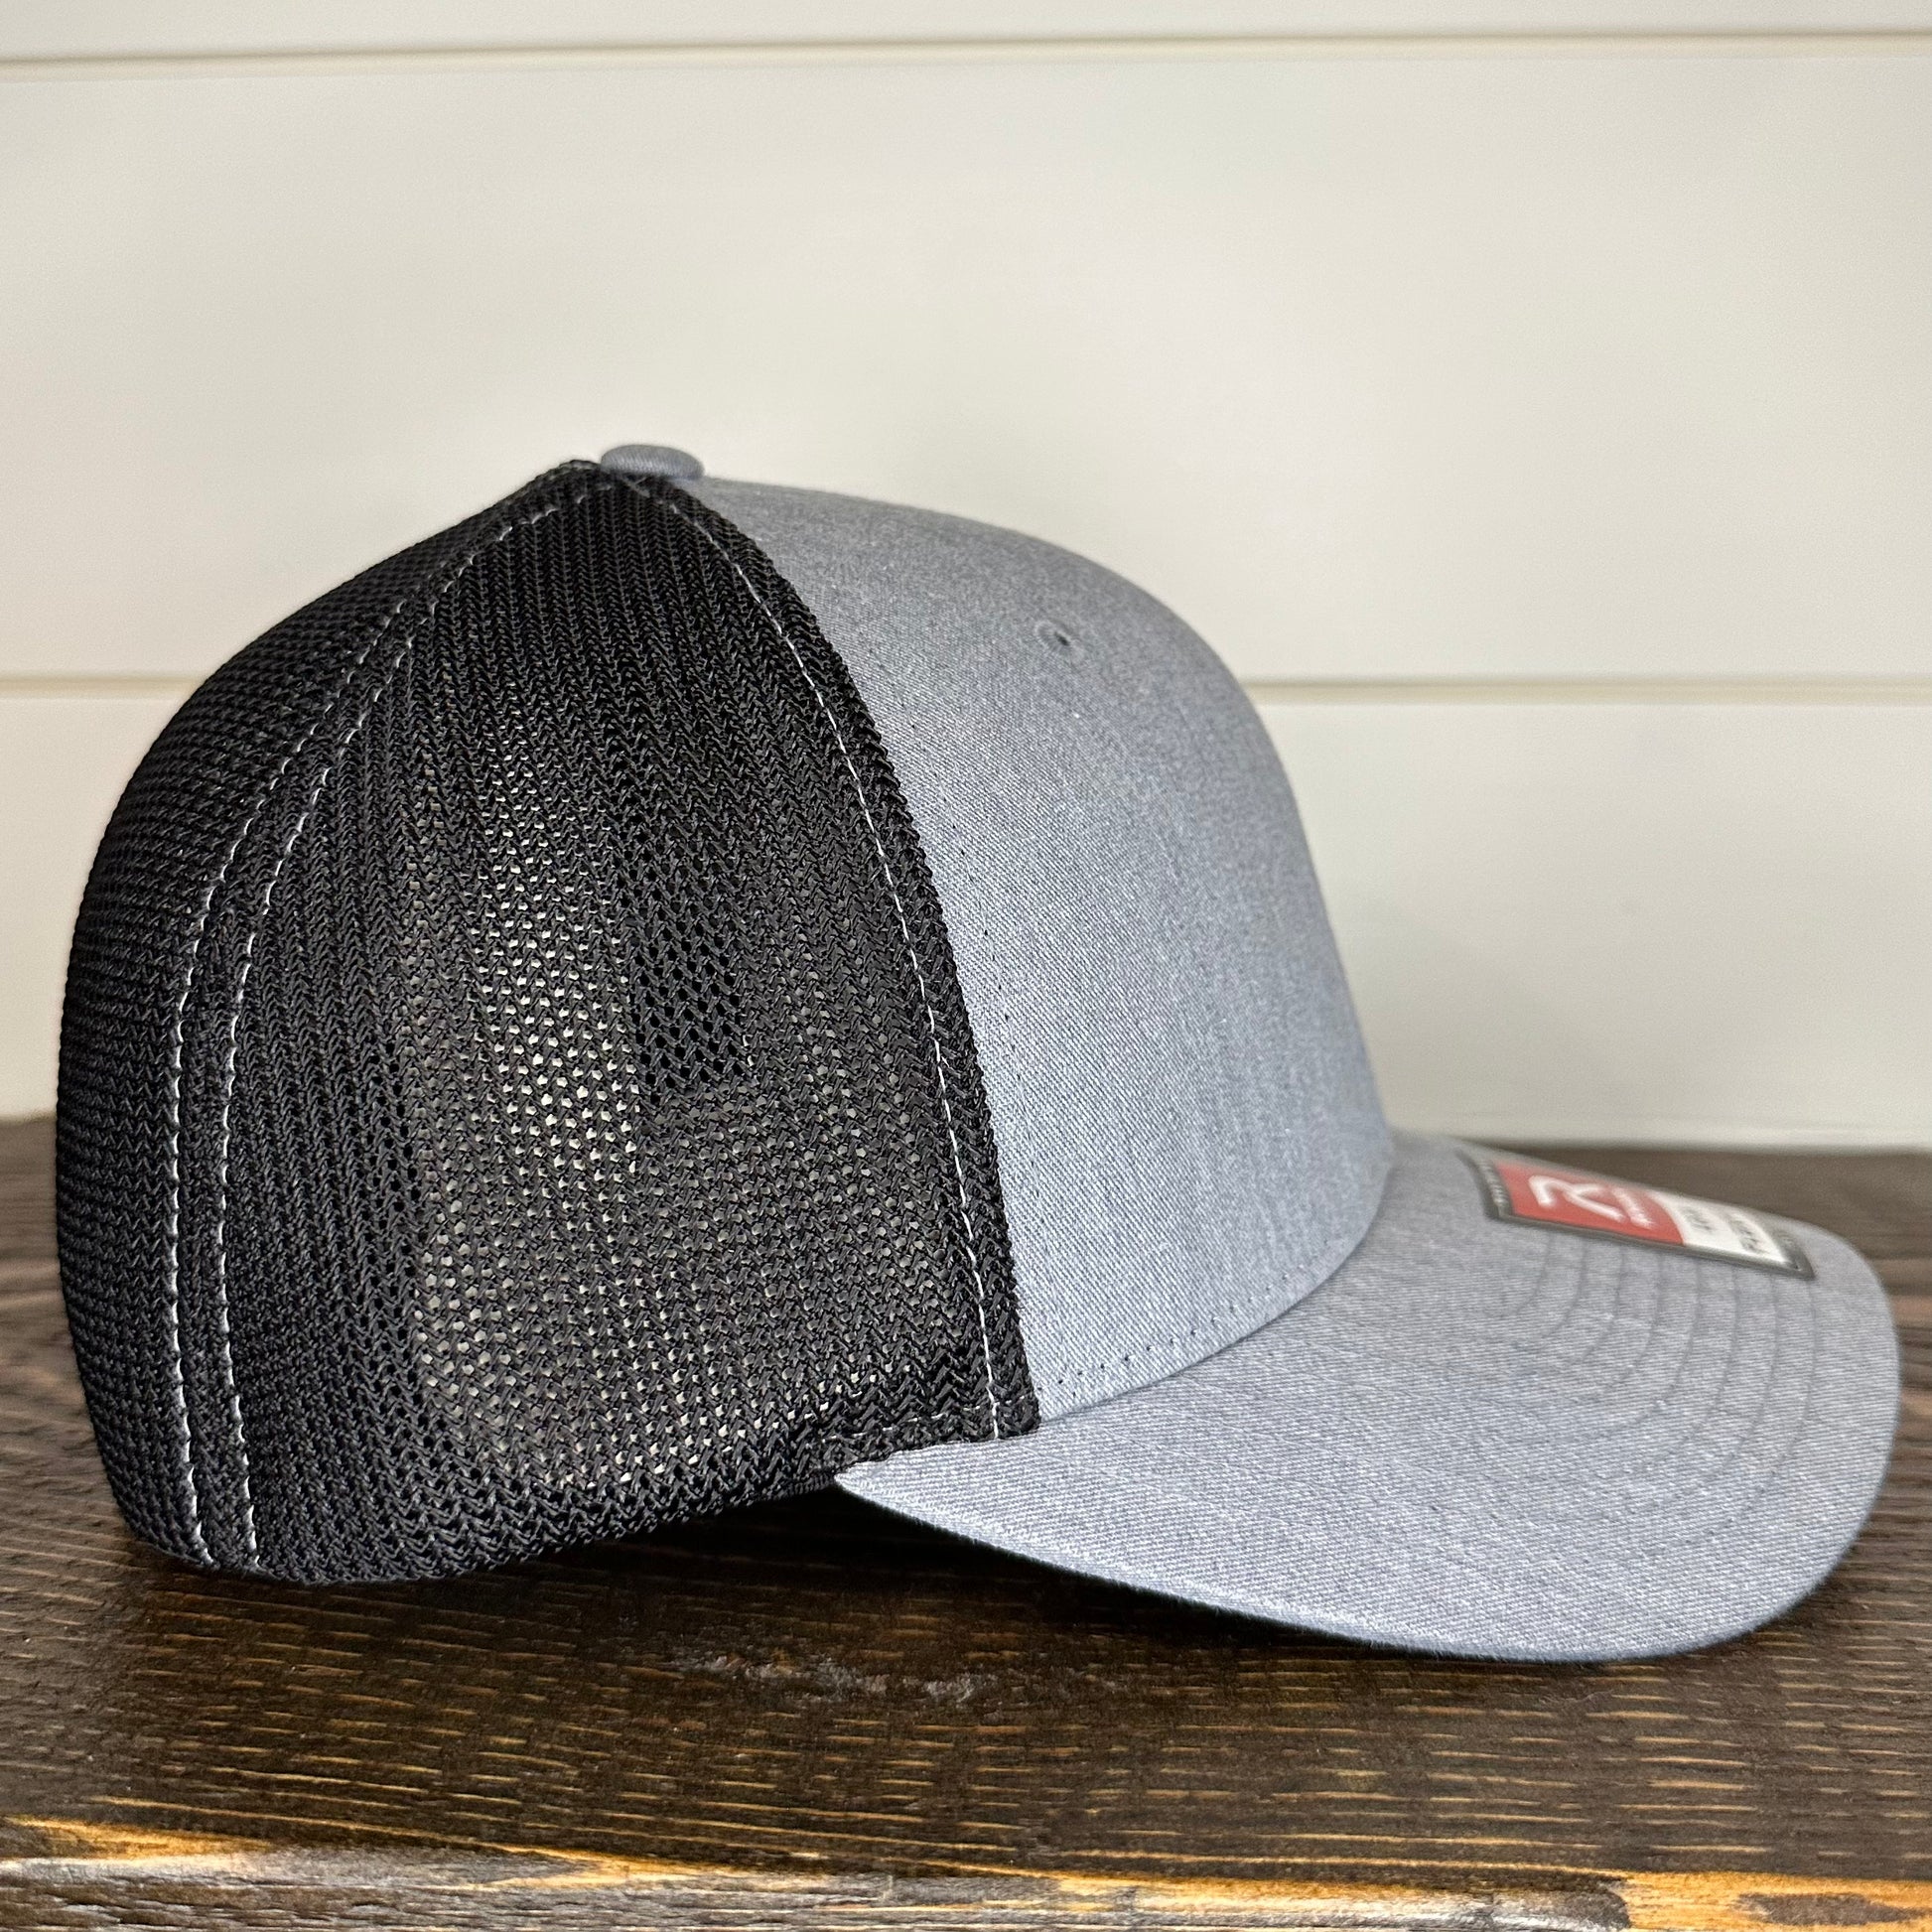 110 Grey/ Trucker Richardson Hat R-Flex – XL Heather - Black LG/ Lids Rusty FLEXFIT